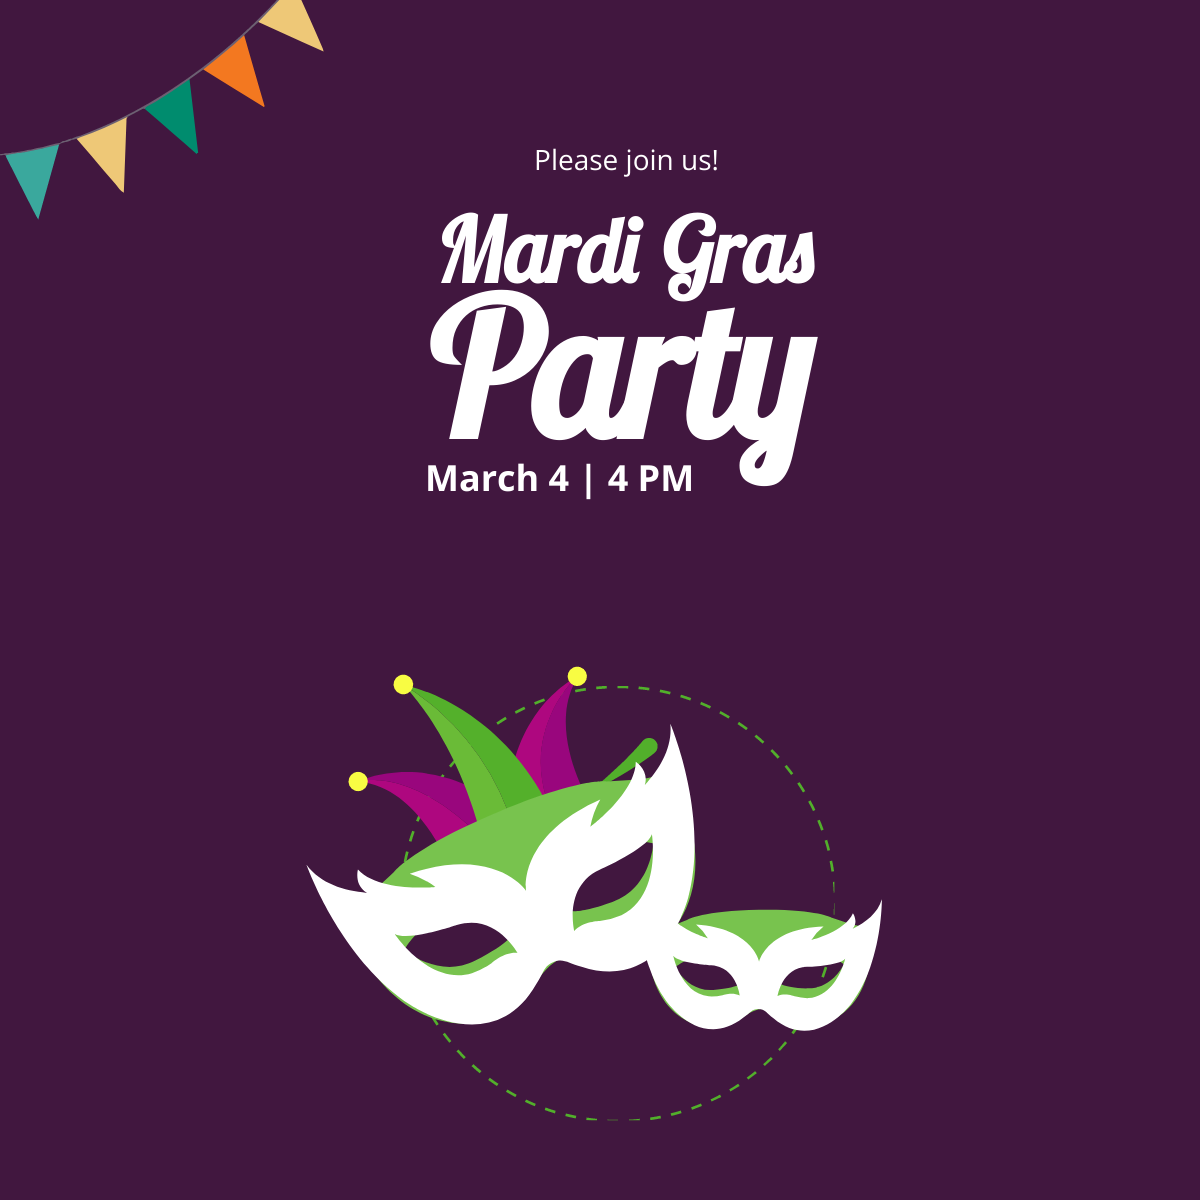 Mardi Gras Party Linkedin Post Template